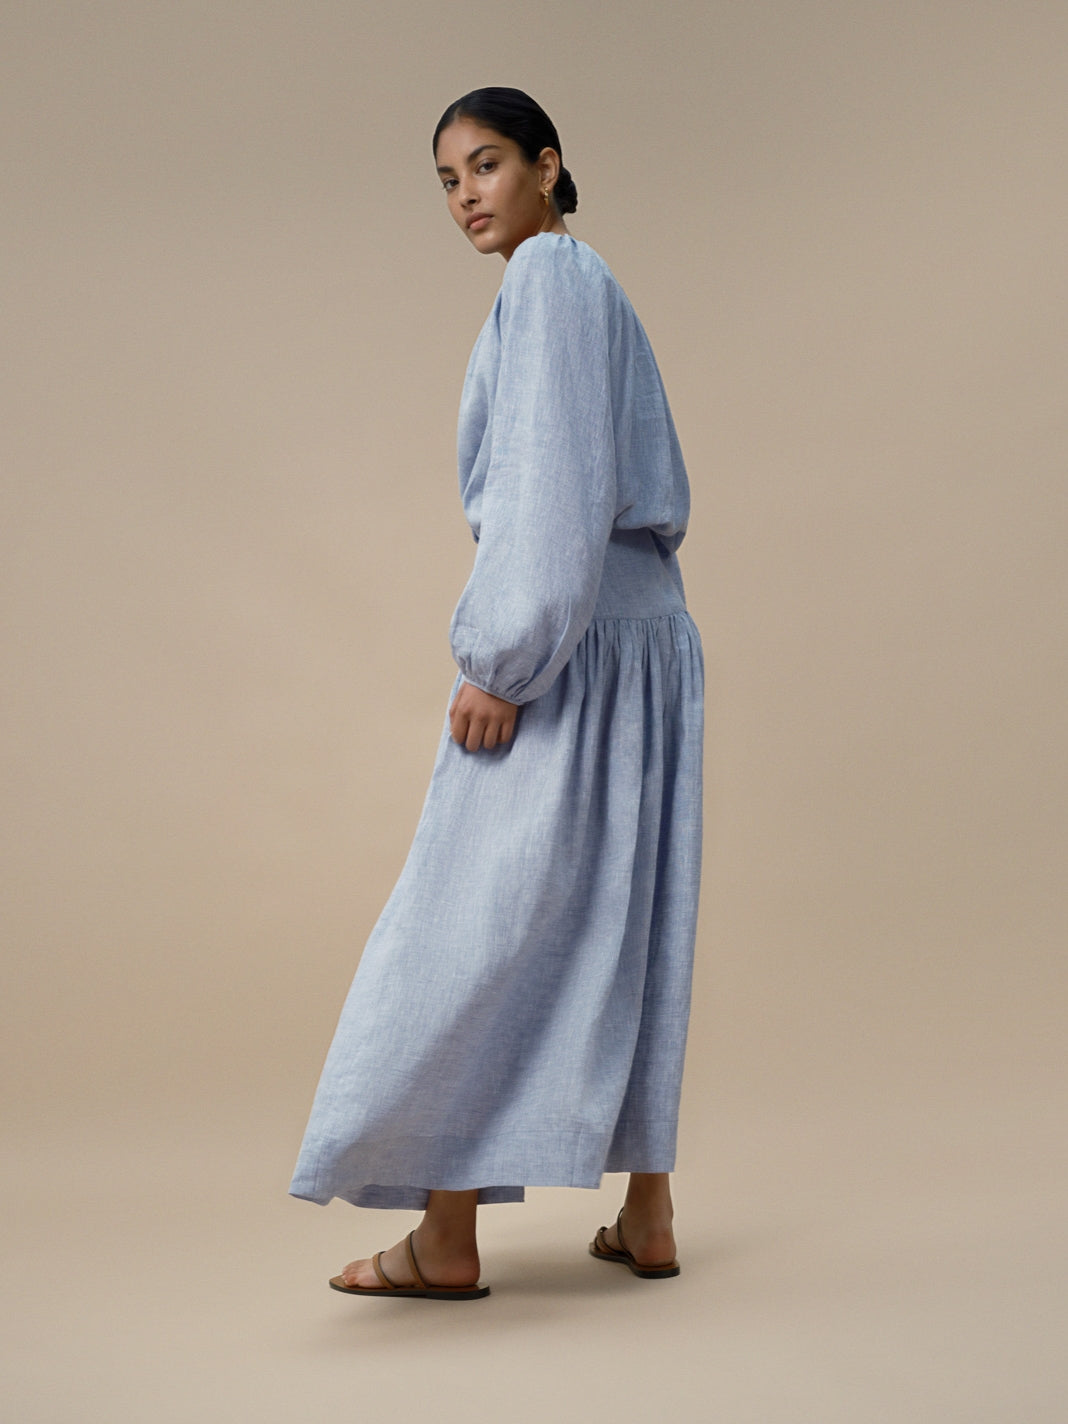 Maud - Blue Chambray Linen Skirt - Mondo Corsini